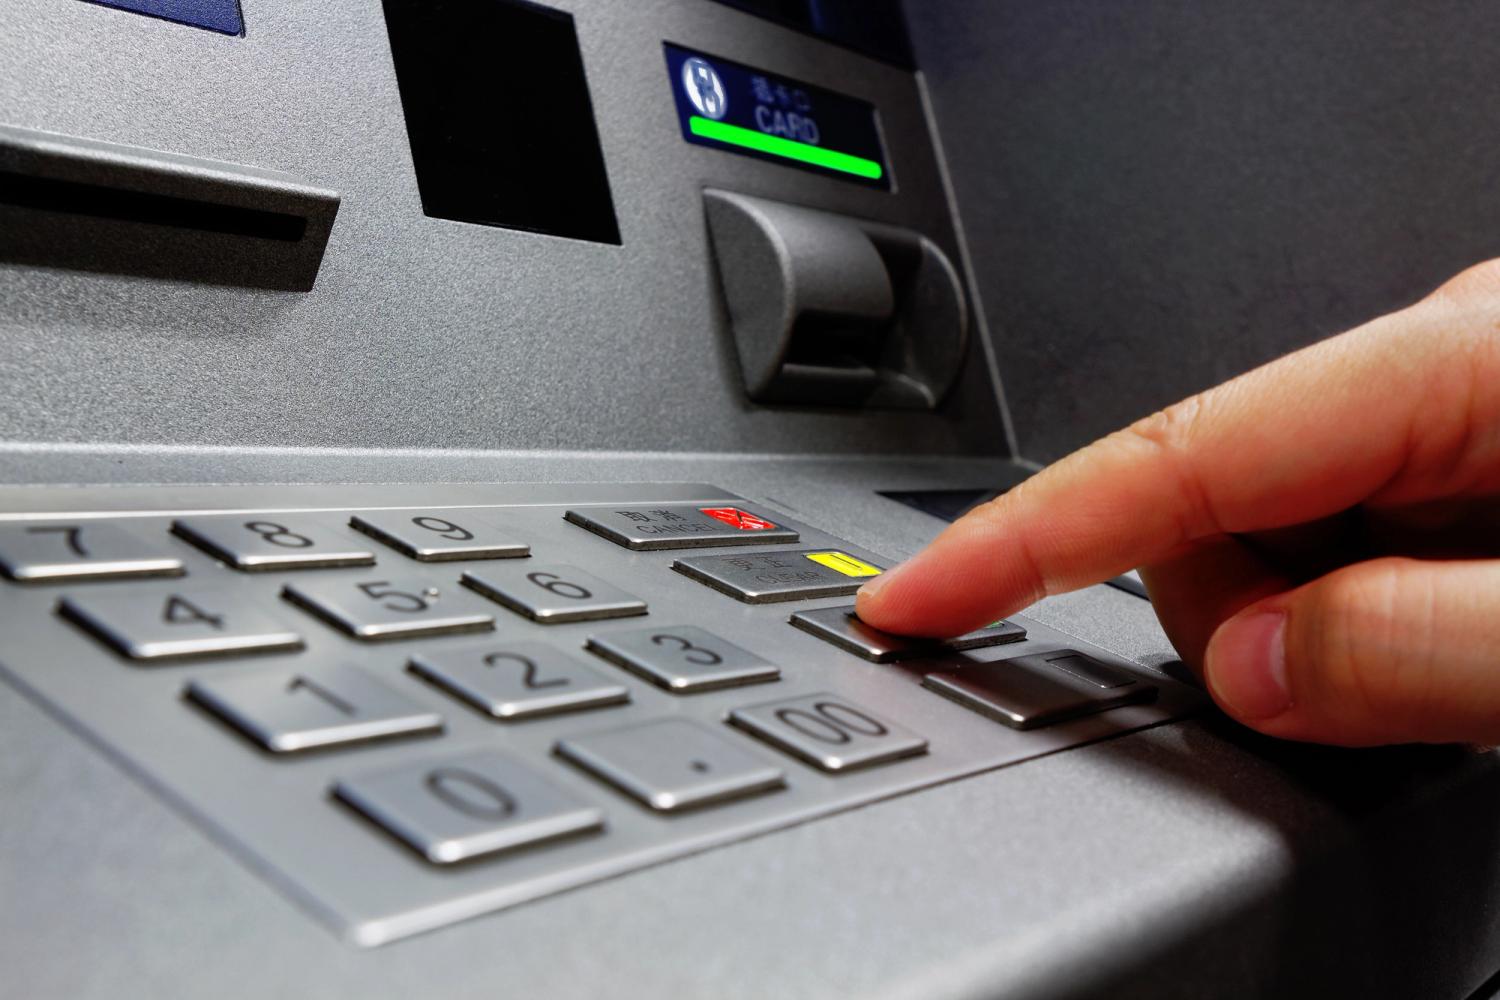 ATM keypad being used